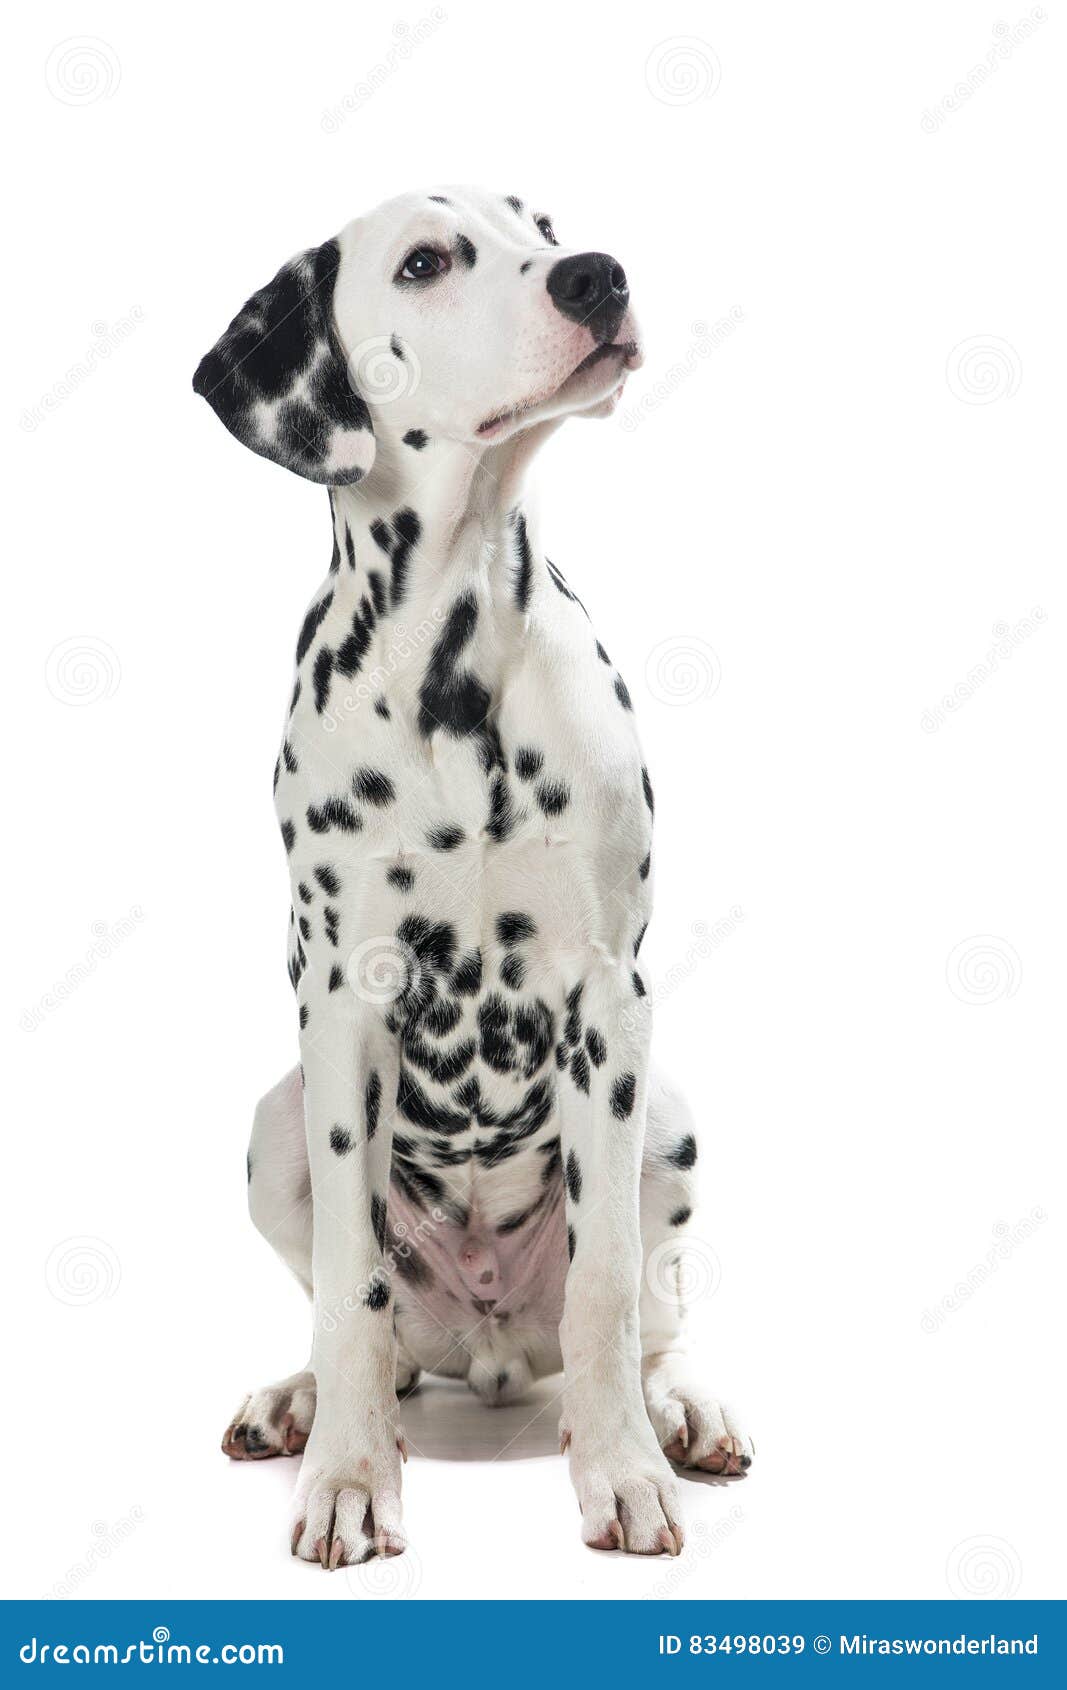 adult sitting dalmatian dog looking up